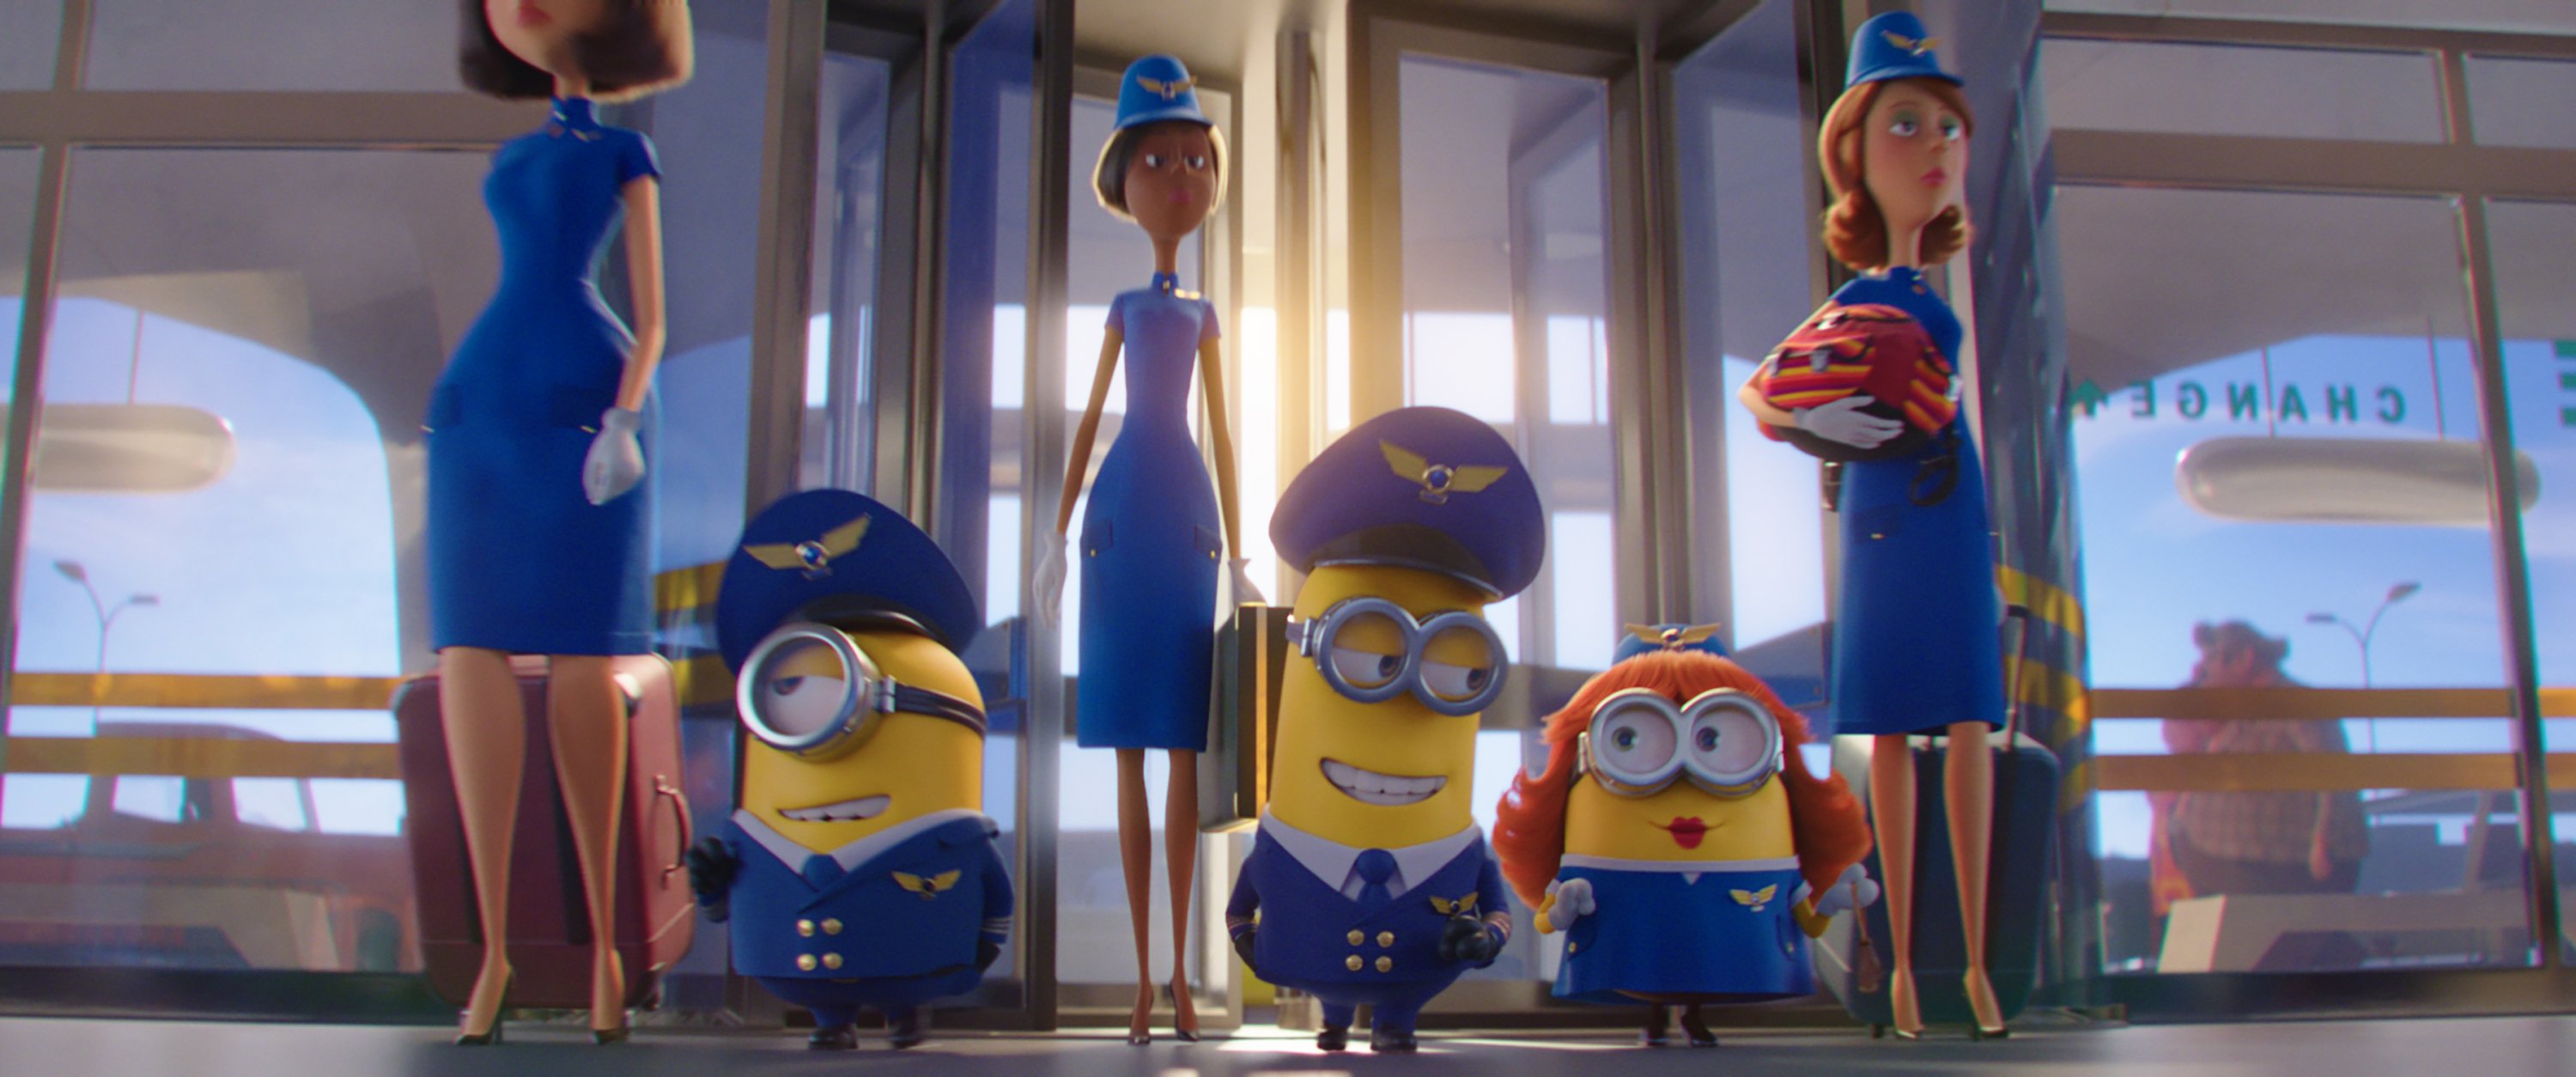 Gambar yang dirilis oleh Universal Pictures ini menunjukkan karakter Minion (LR), Kevin, Stuart dan Bob dalam sebuah adegan dari 